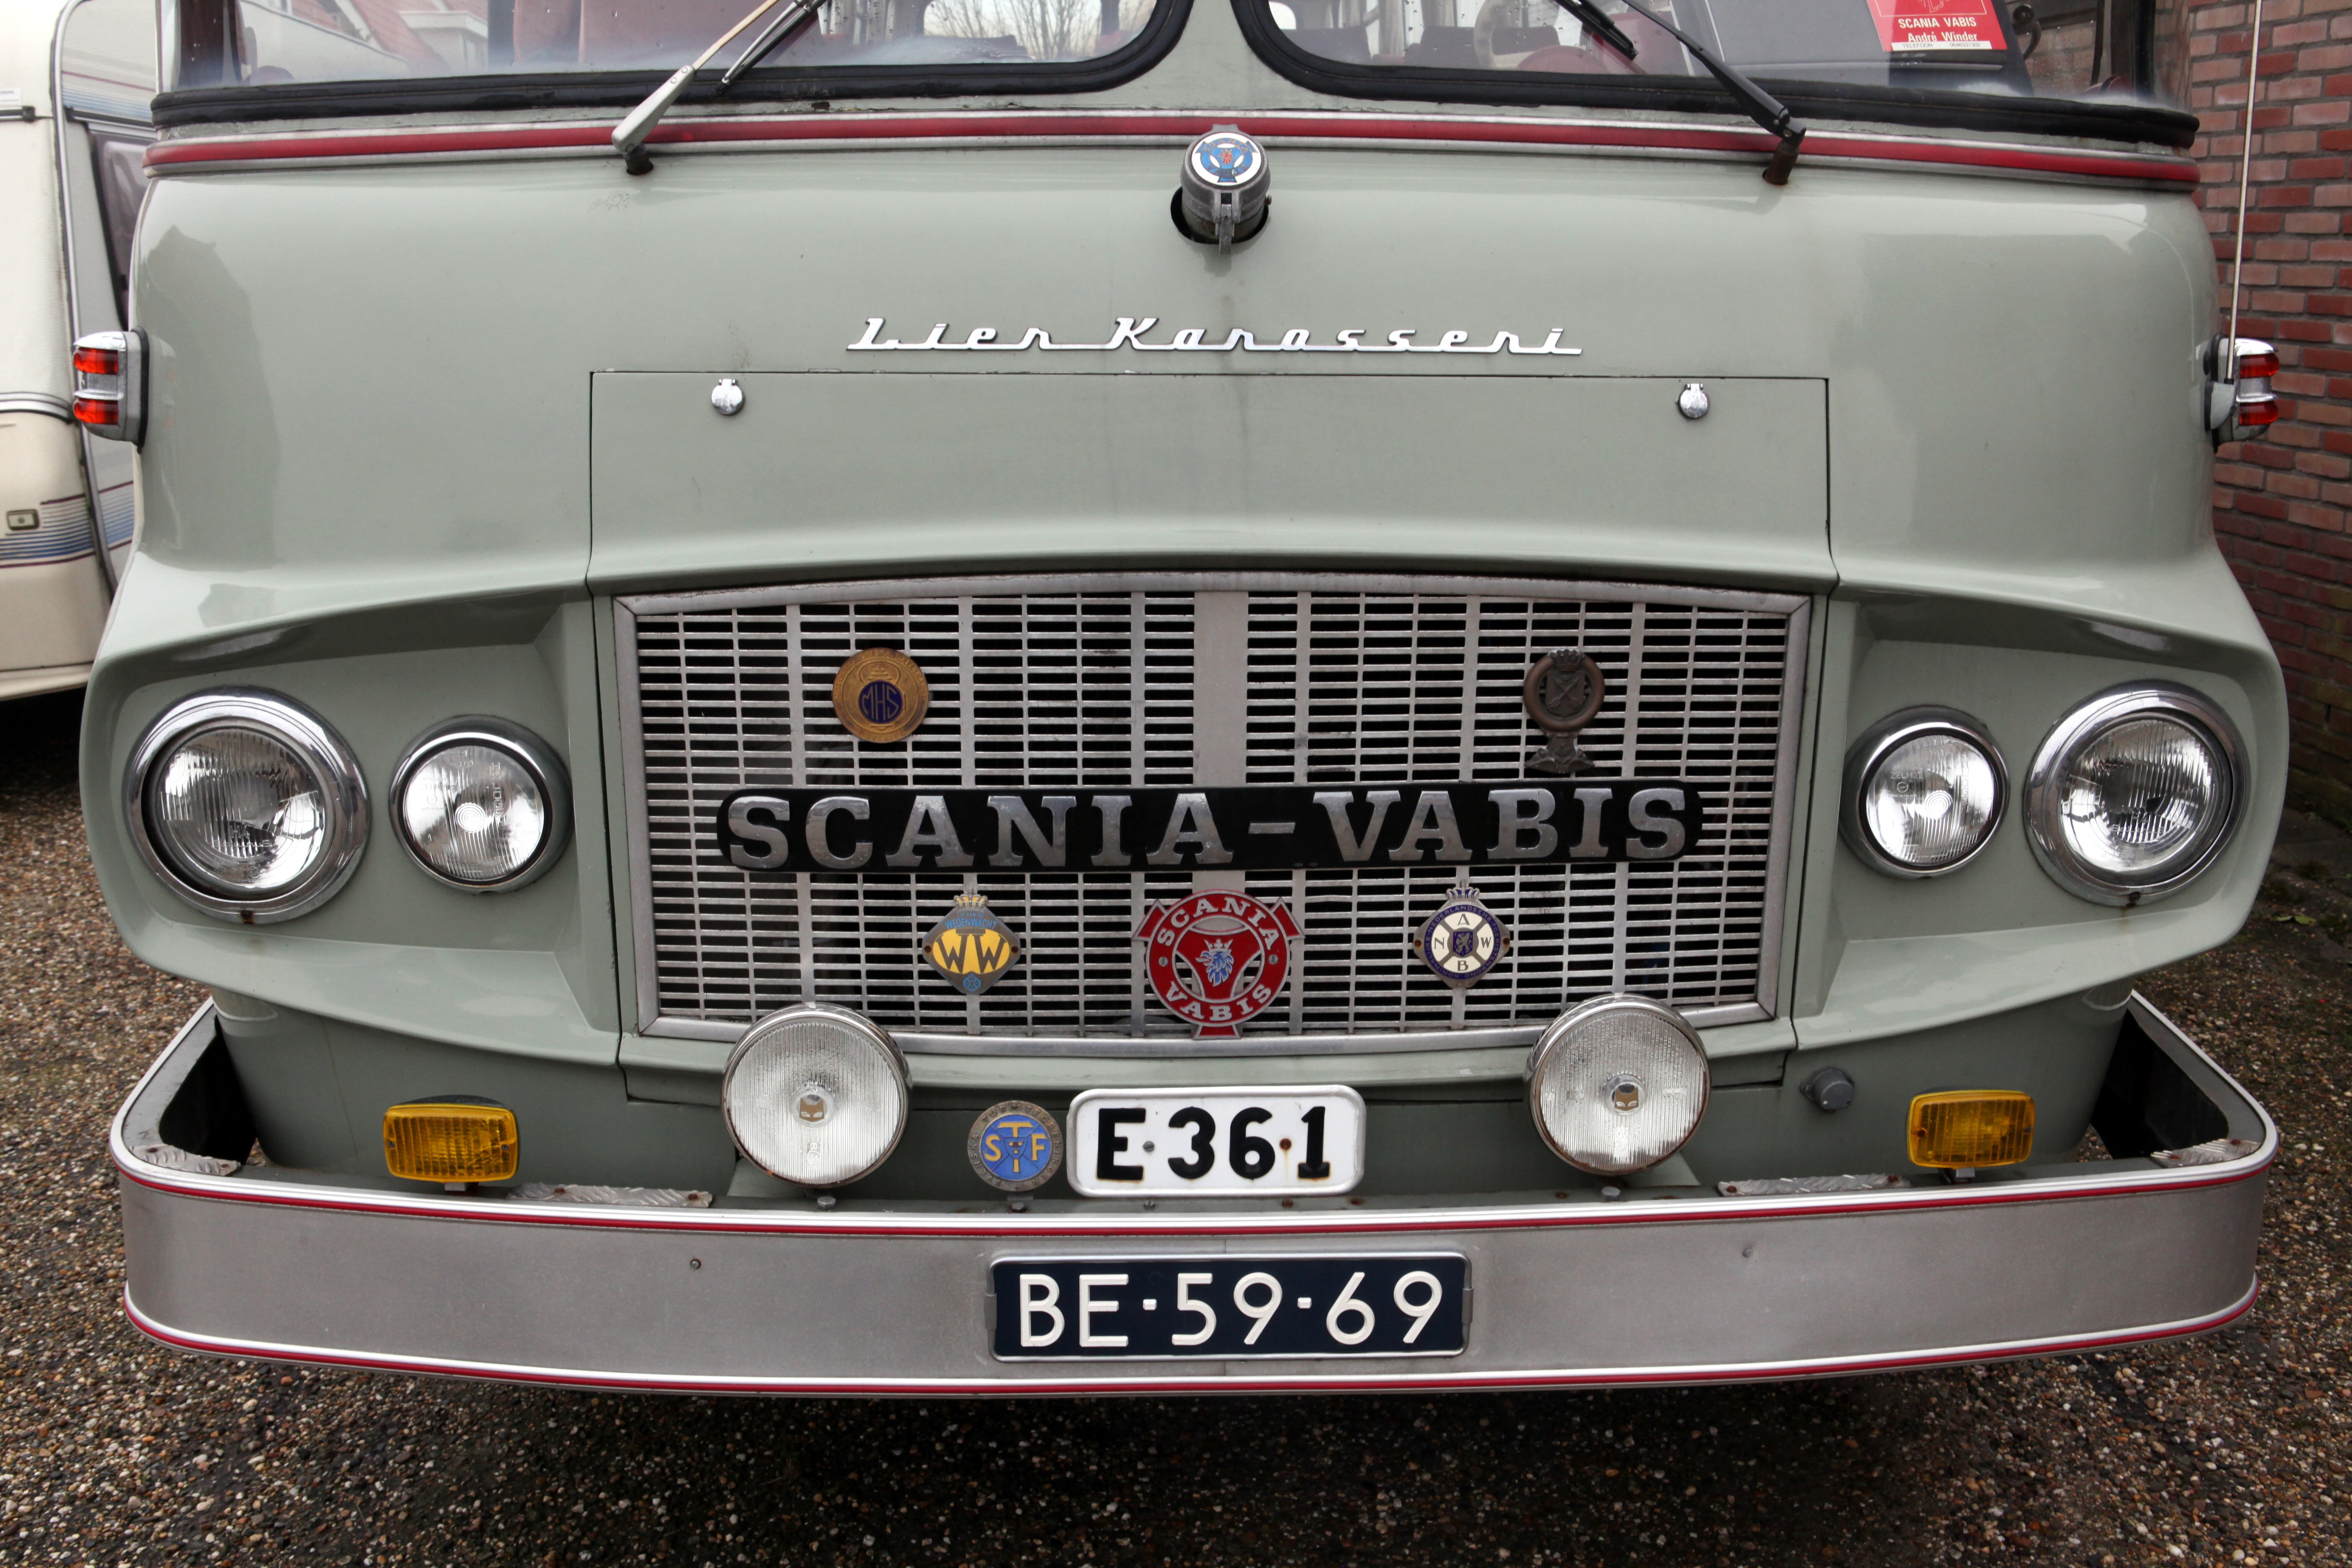 Fichier: bus Scania-vabis B 56 (3).jpg - Wikimedia Commons